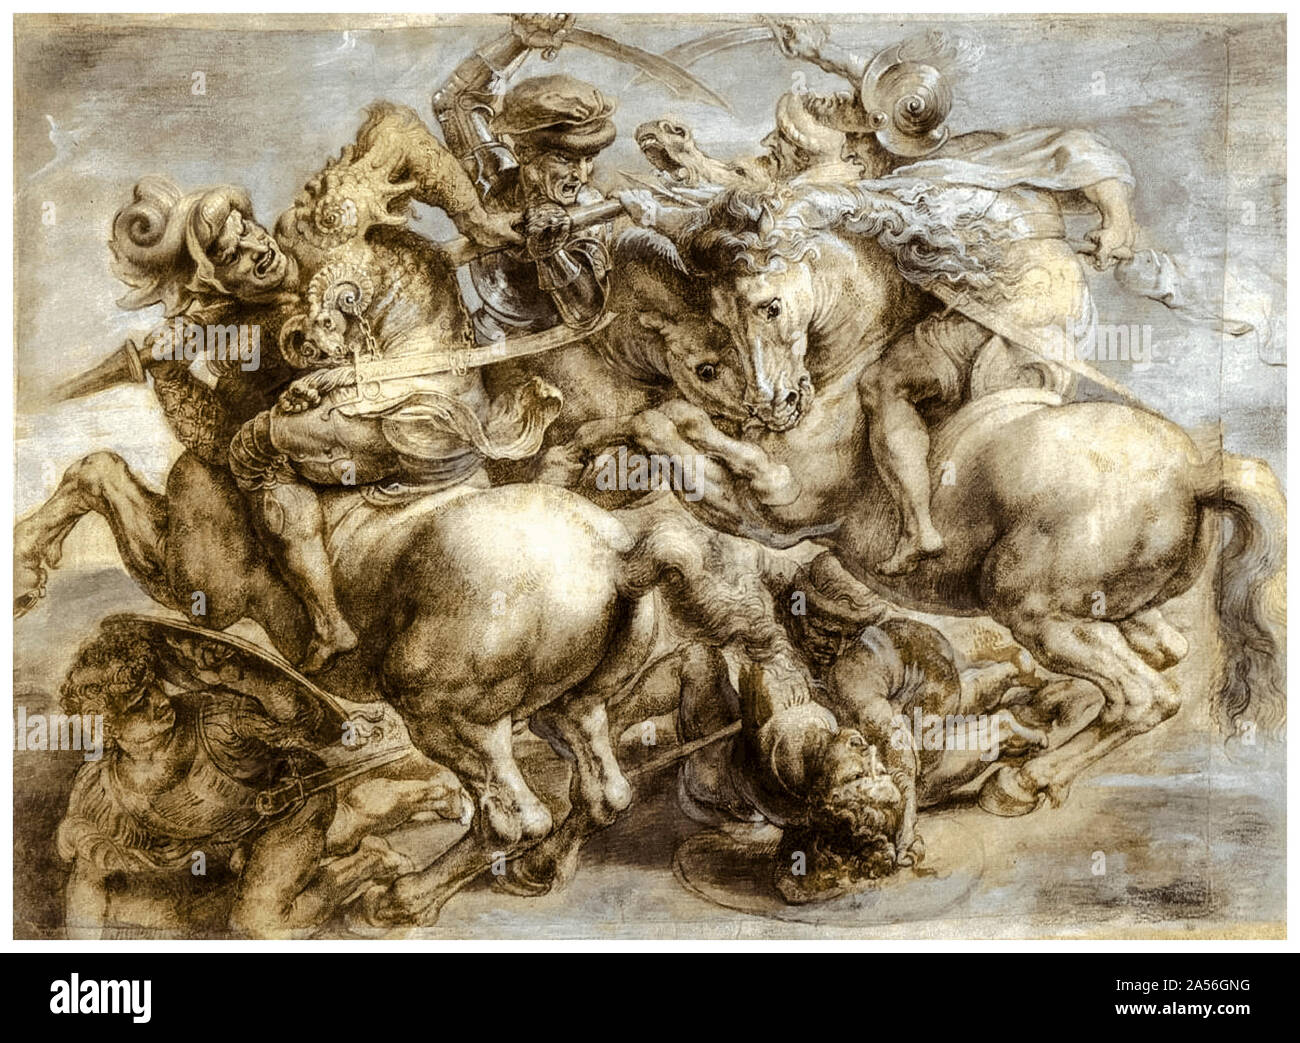 Peter Paul Rubens after Leonardo Da Vinci, Copy after The Battle of Anghiari , drawing, painting, circa 1603 Stock Photo